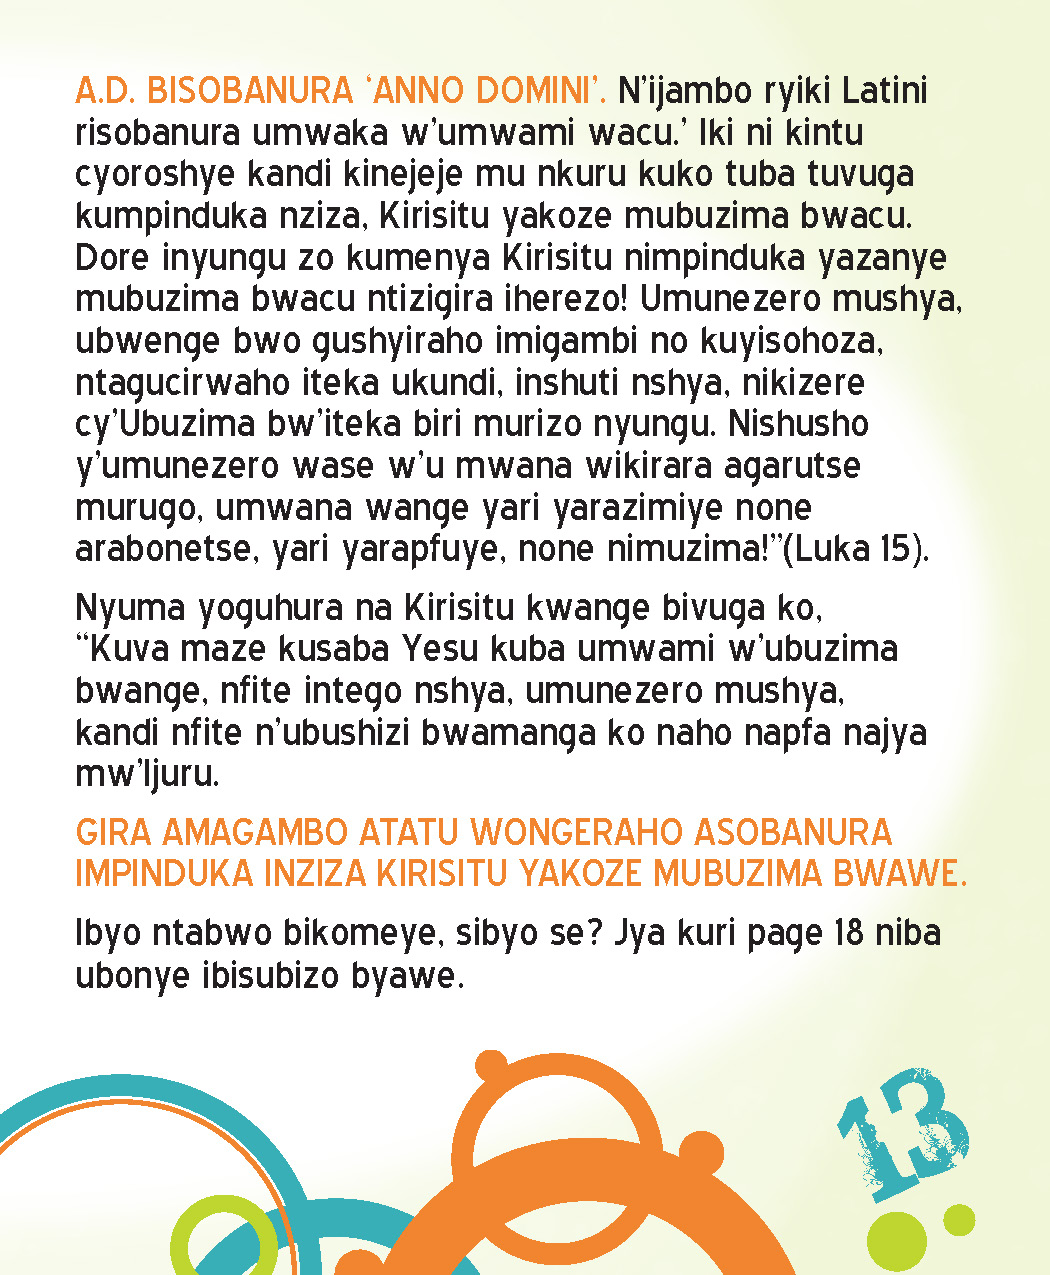 OMW_Kinyarwanda_Page-13.jpg